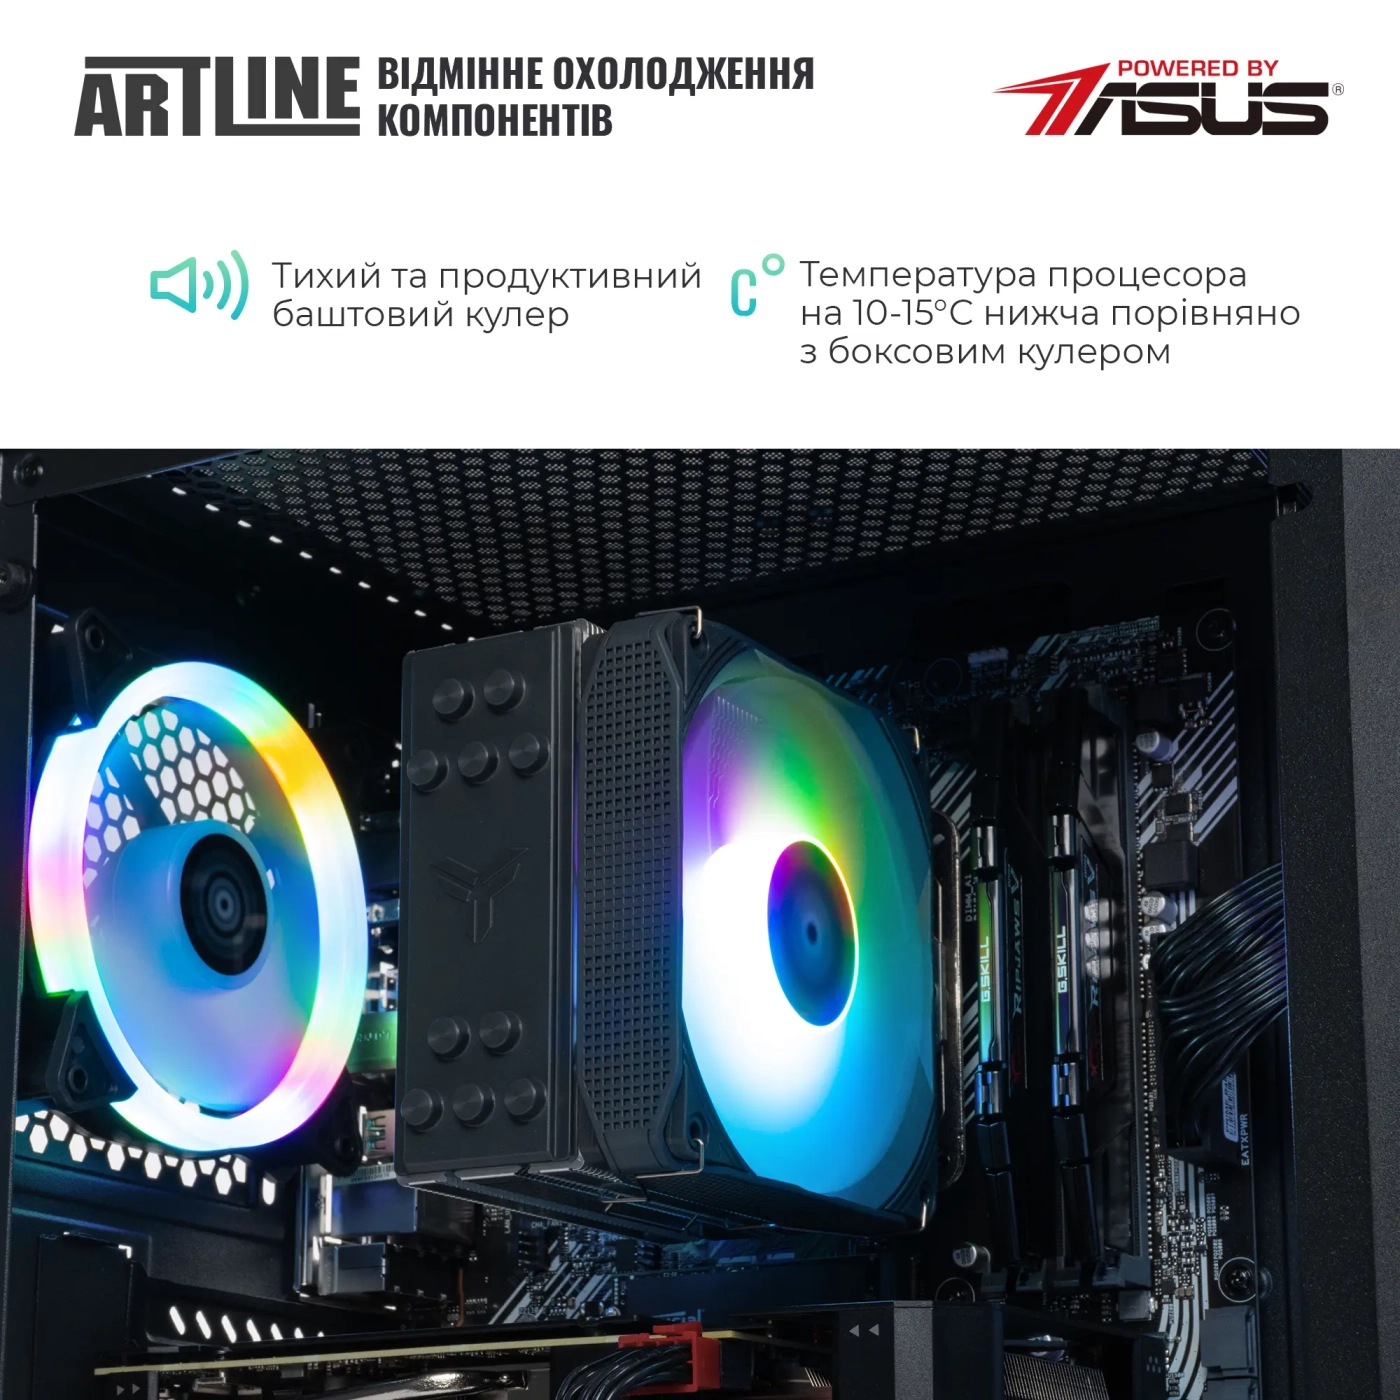 Купить Компьютер ARTLINE Gaming X35 (X35v55) - фото 5